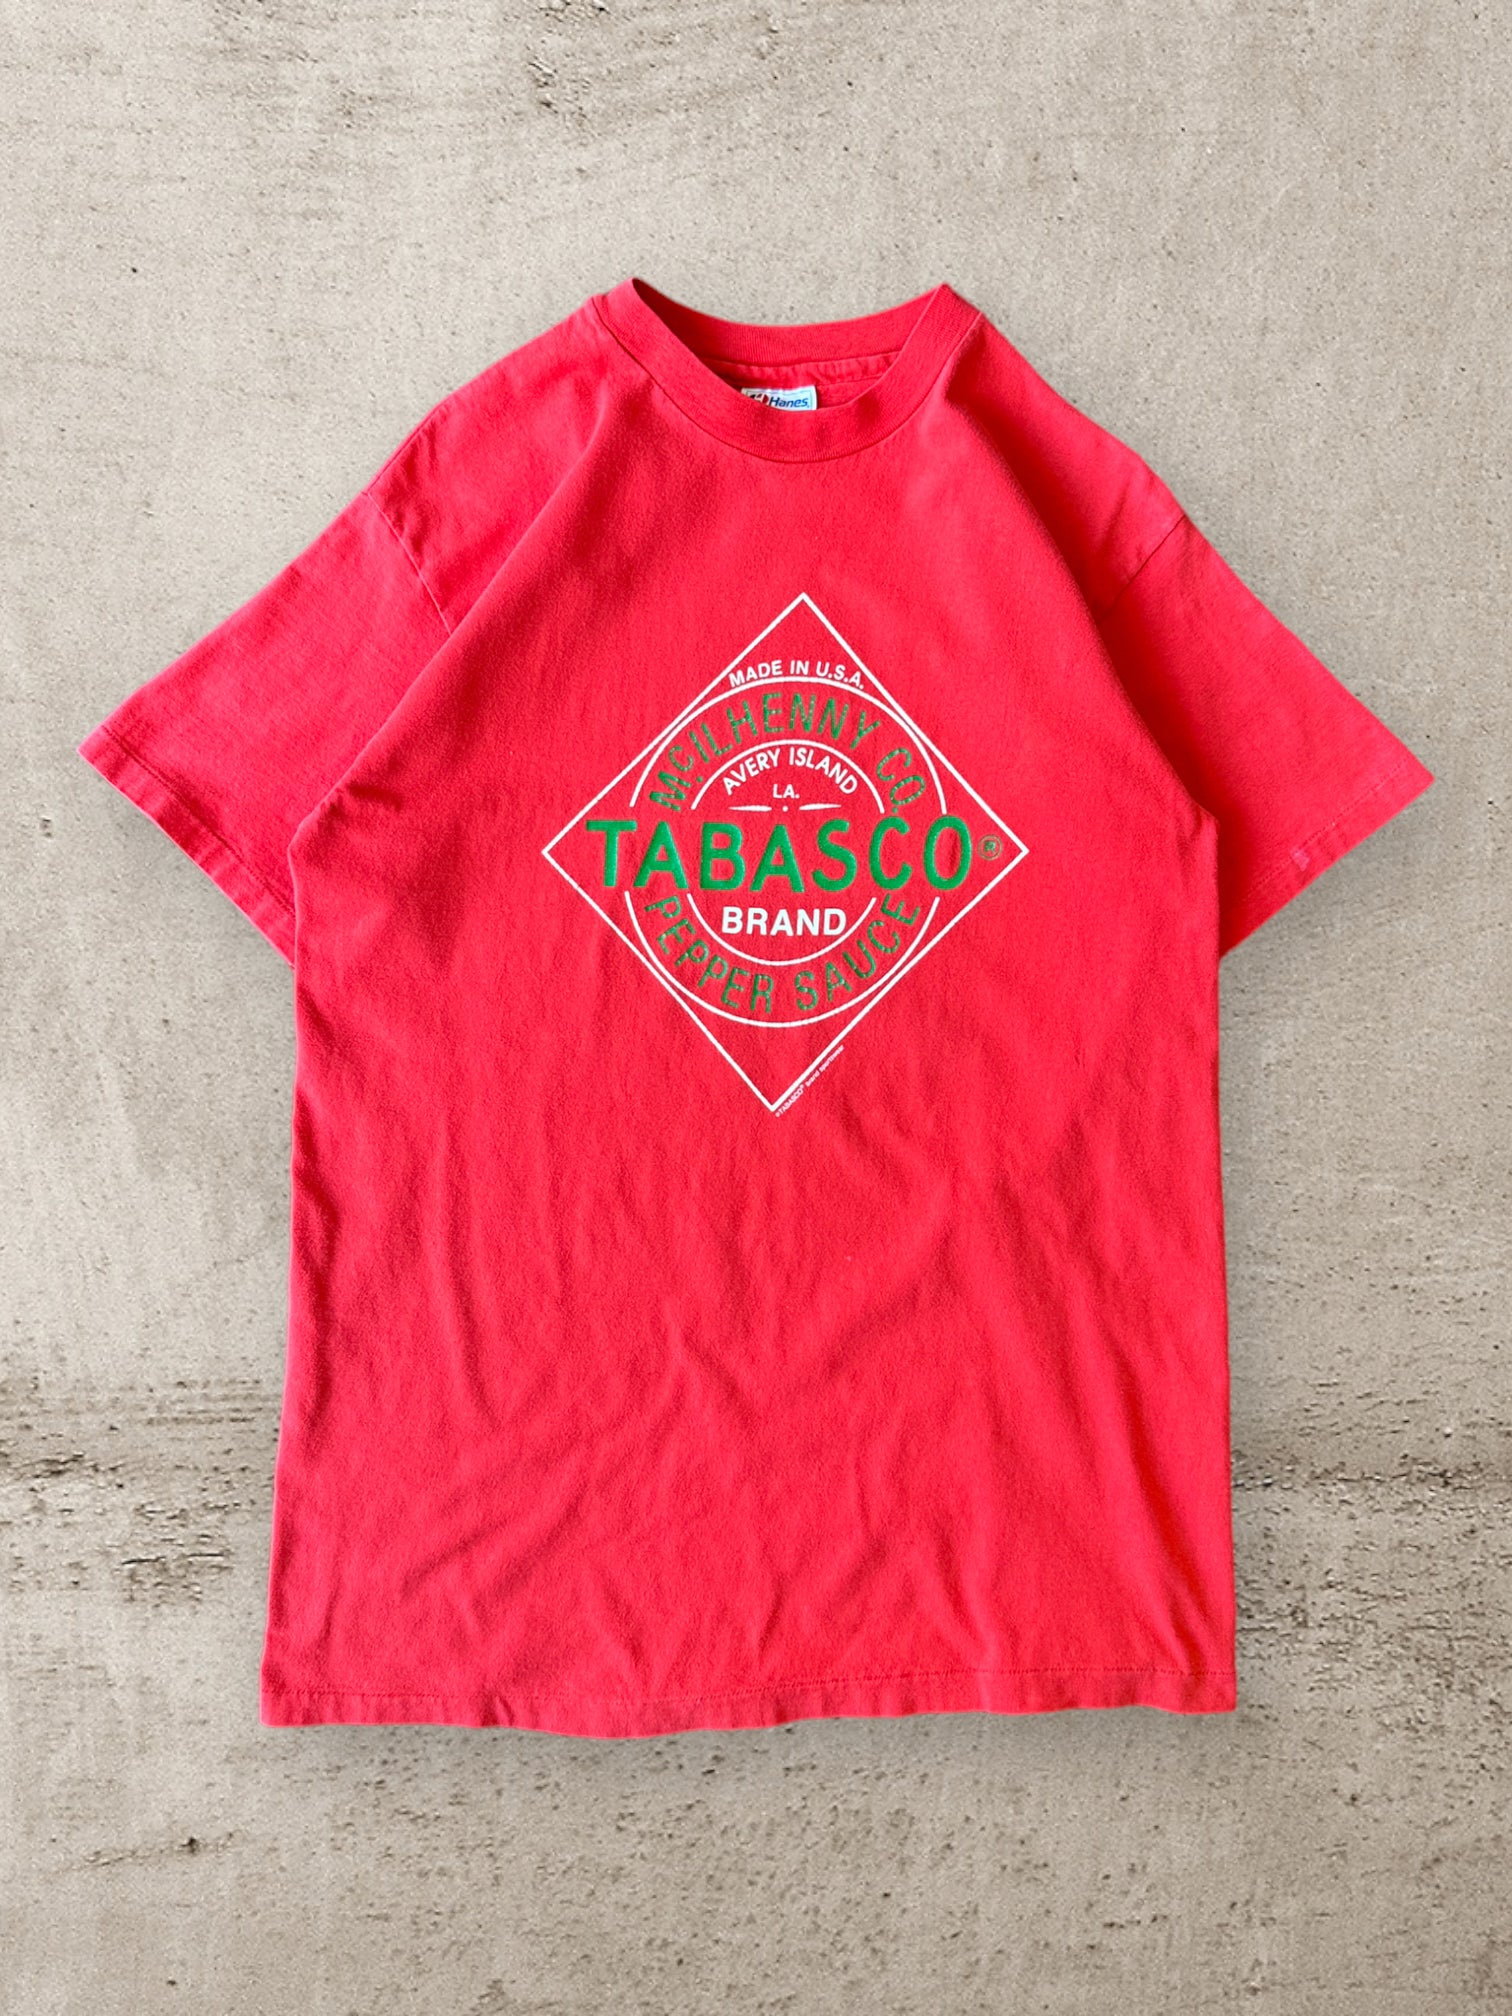 90s Tabasco Sauce Graphic T-Shirt - Large